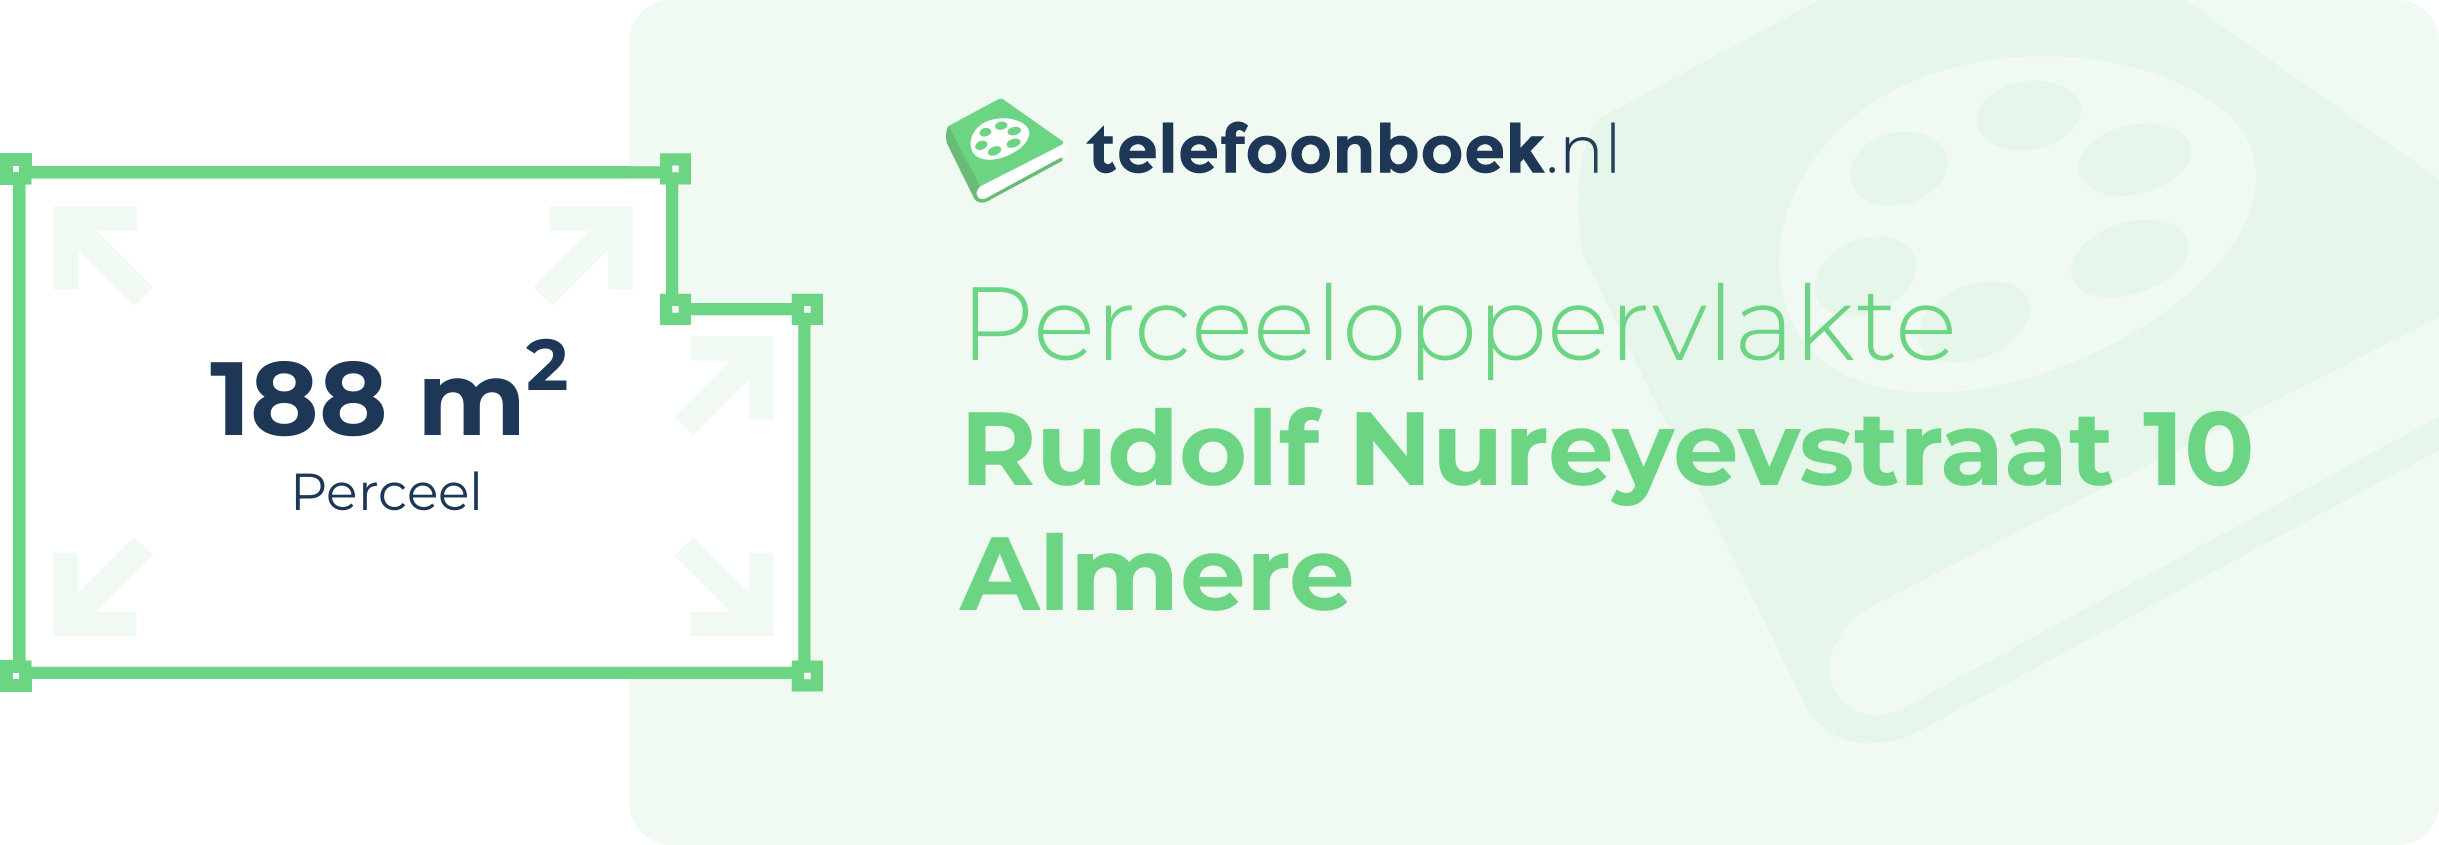 Perceeloppervlakte Rudolf Nureyevstraat 10 Almere